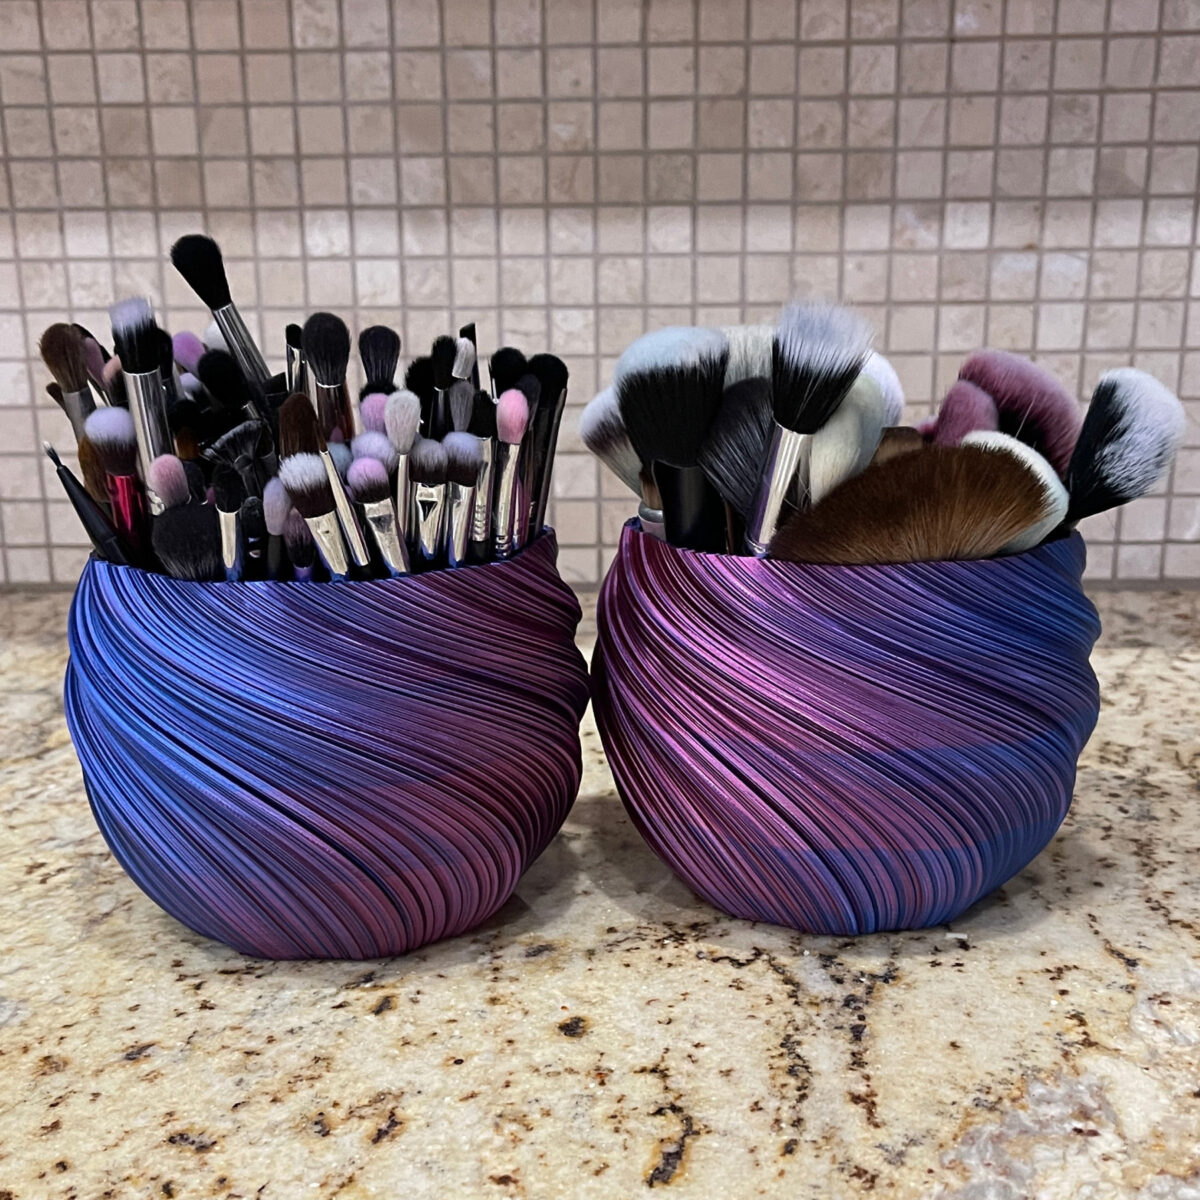 Cordelia's blue and purple swirled makeup brush holders